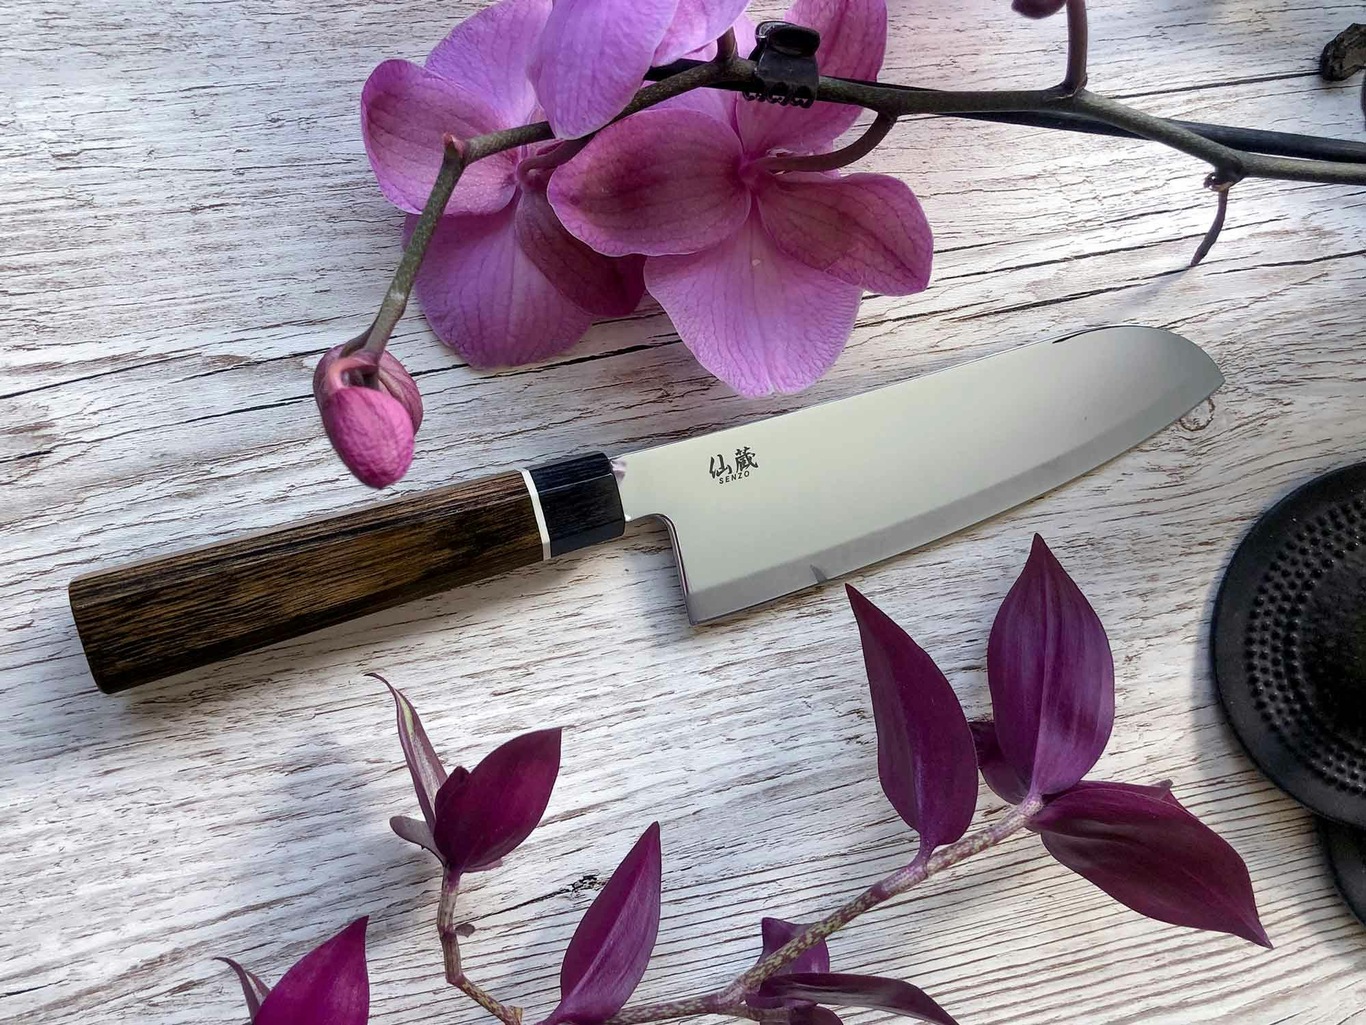 https://royaldesign.com/image/2/senzo-giniro-gyuto-chef-knife-17-cm-1?w=800&quality=80